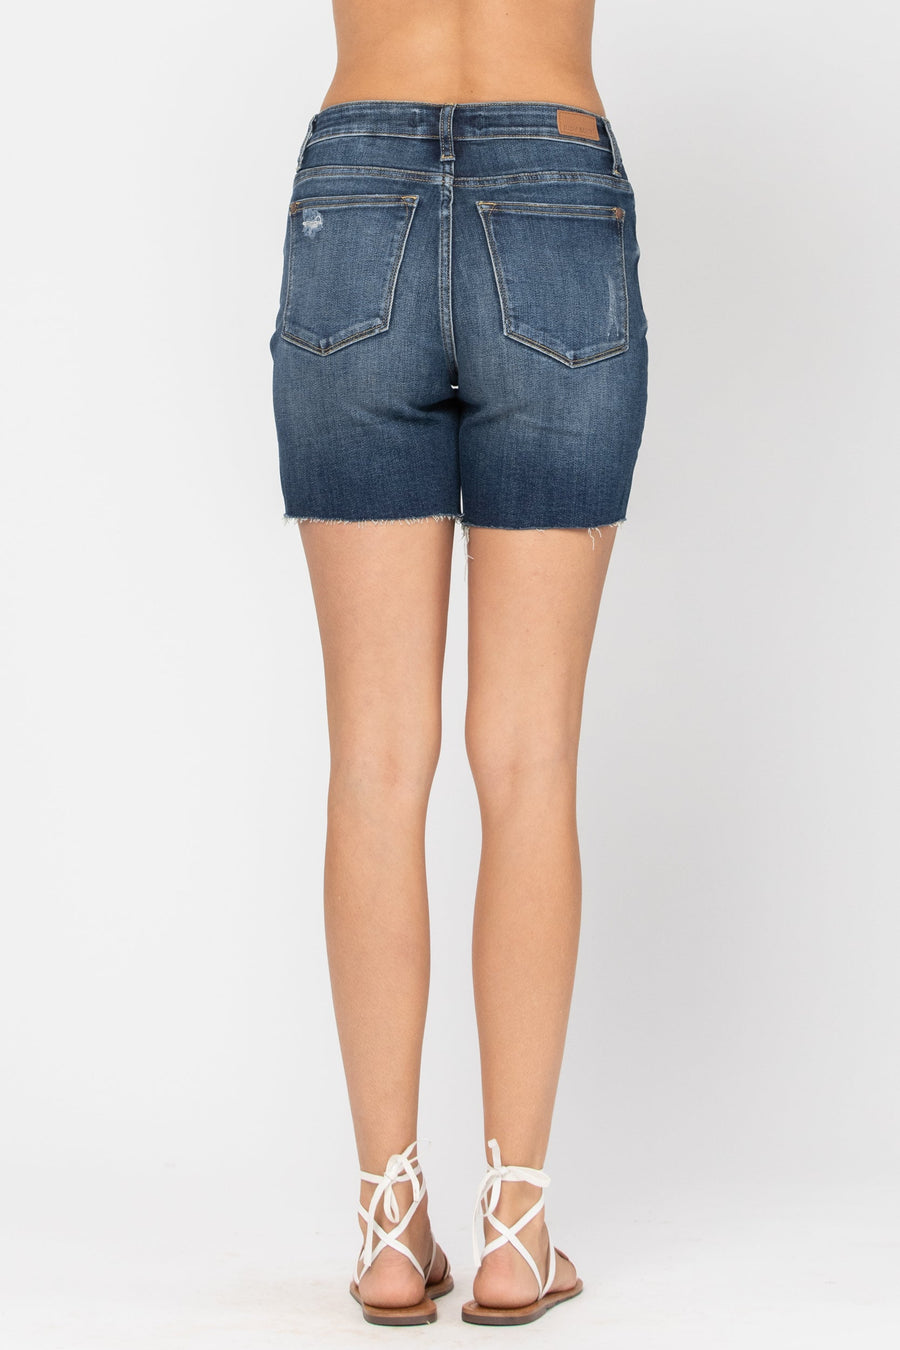 Kayla Mid-Thigh Shorts - PLUS